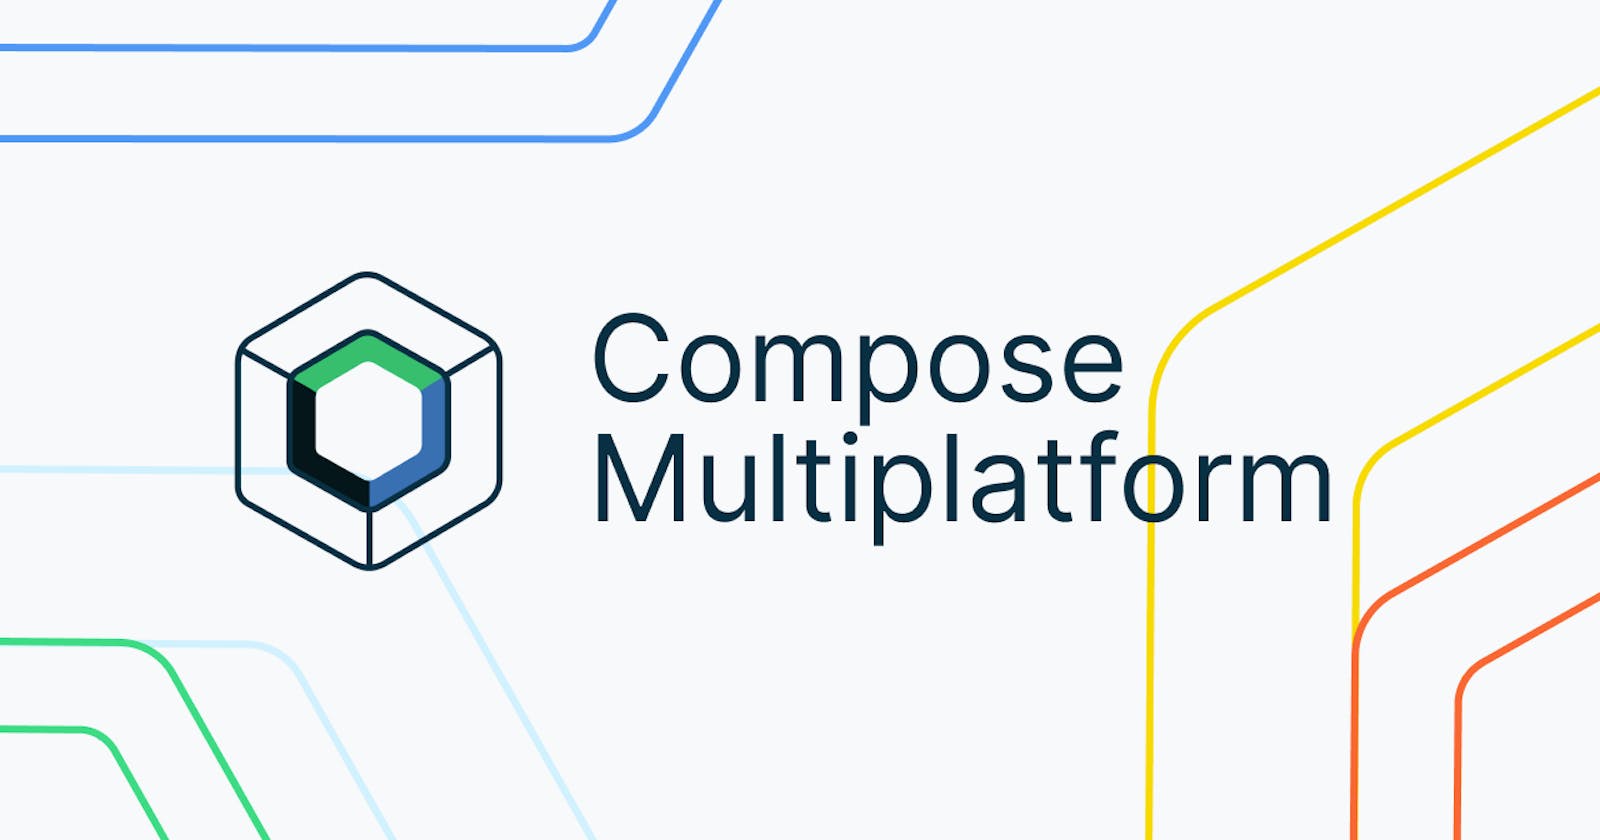 Compose Multiplatform - Concurrent de solutions multiplateforme ?